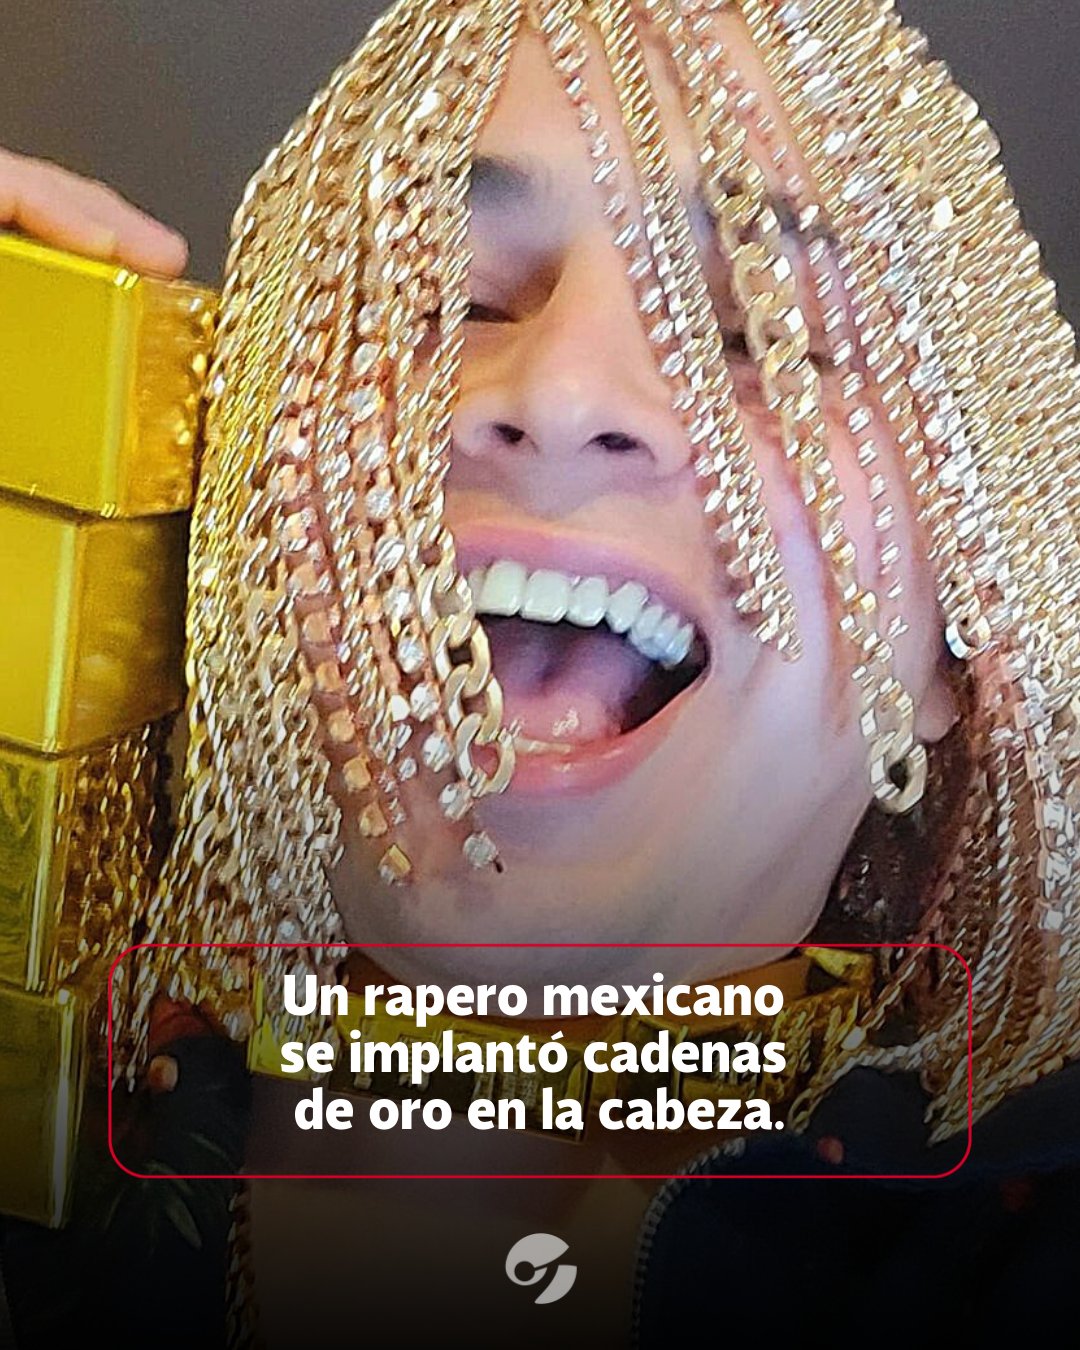 sal Subvención Naturaleza Clarín on Twitter: "El rapero mexicano, Dan Sur, se implantó cadenas de oro  como cabello. https://t.co/6gKFEnr4Uf" / Twitter